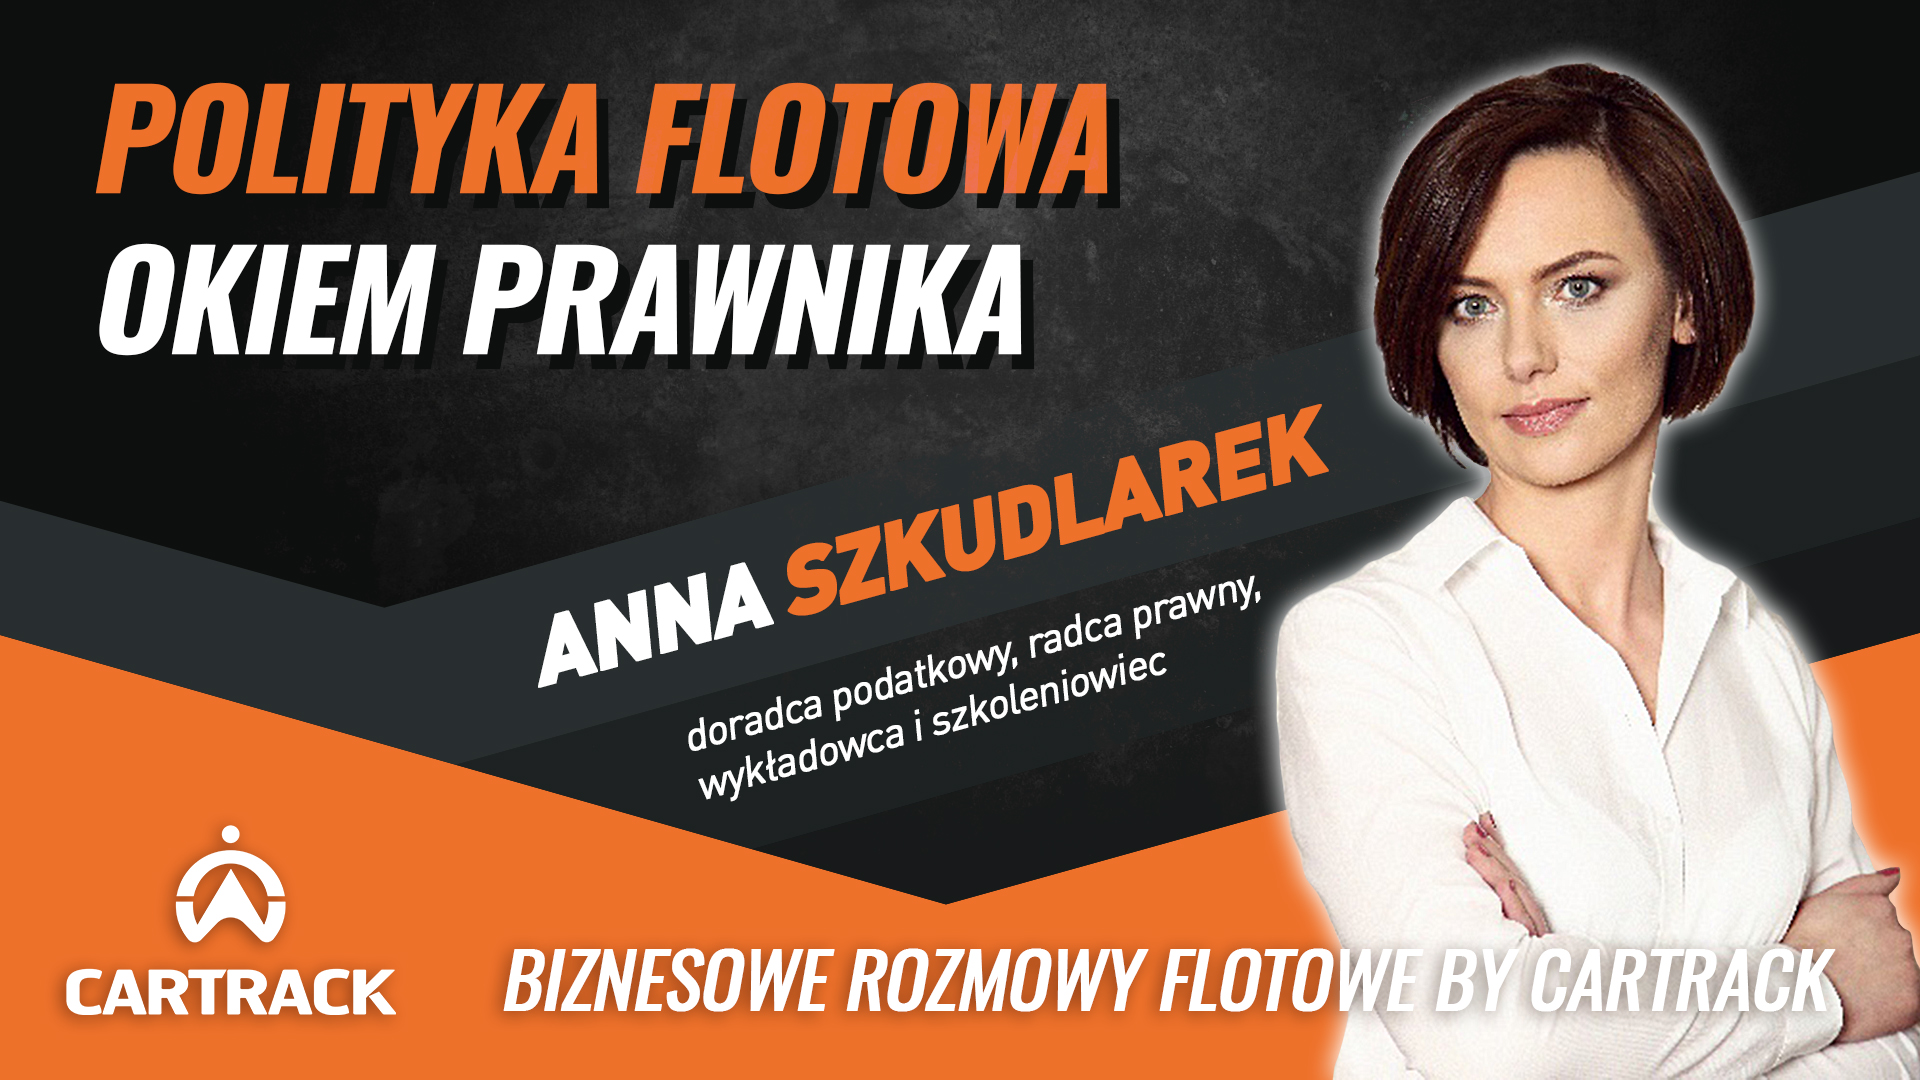 anna szkudlarek polityka flotowa podcast cartrack polska